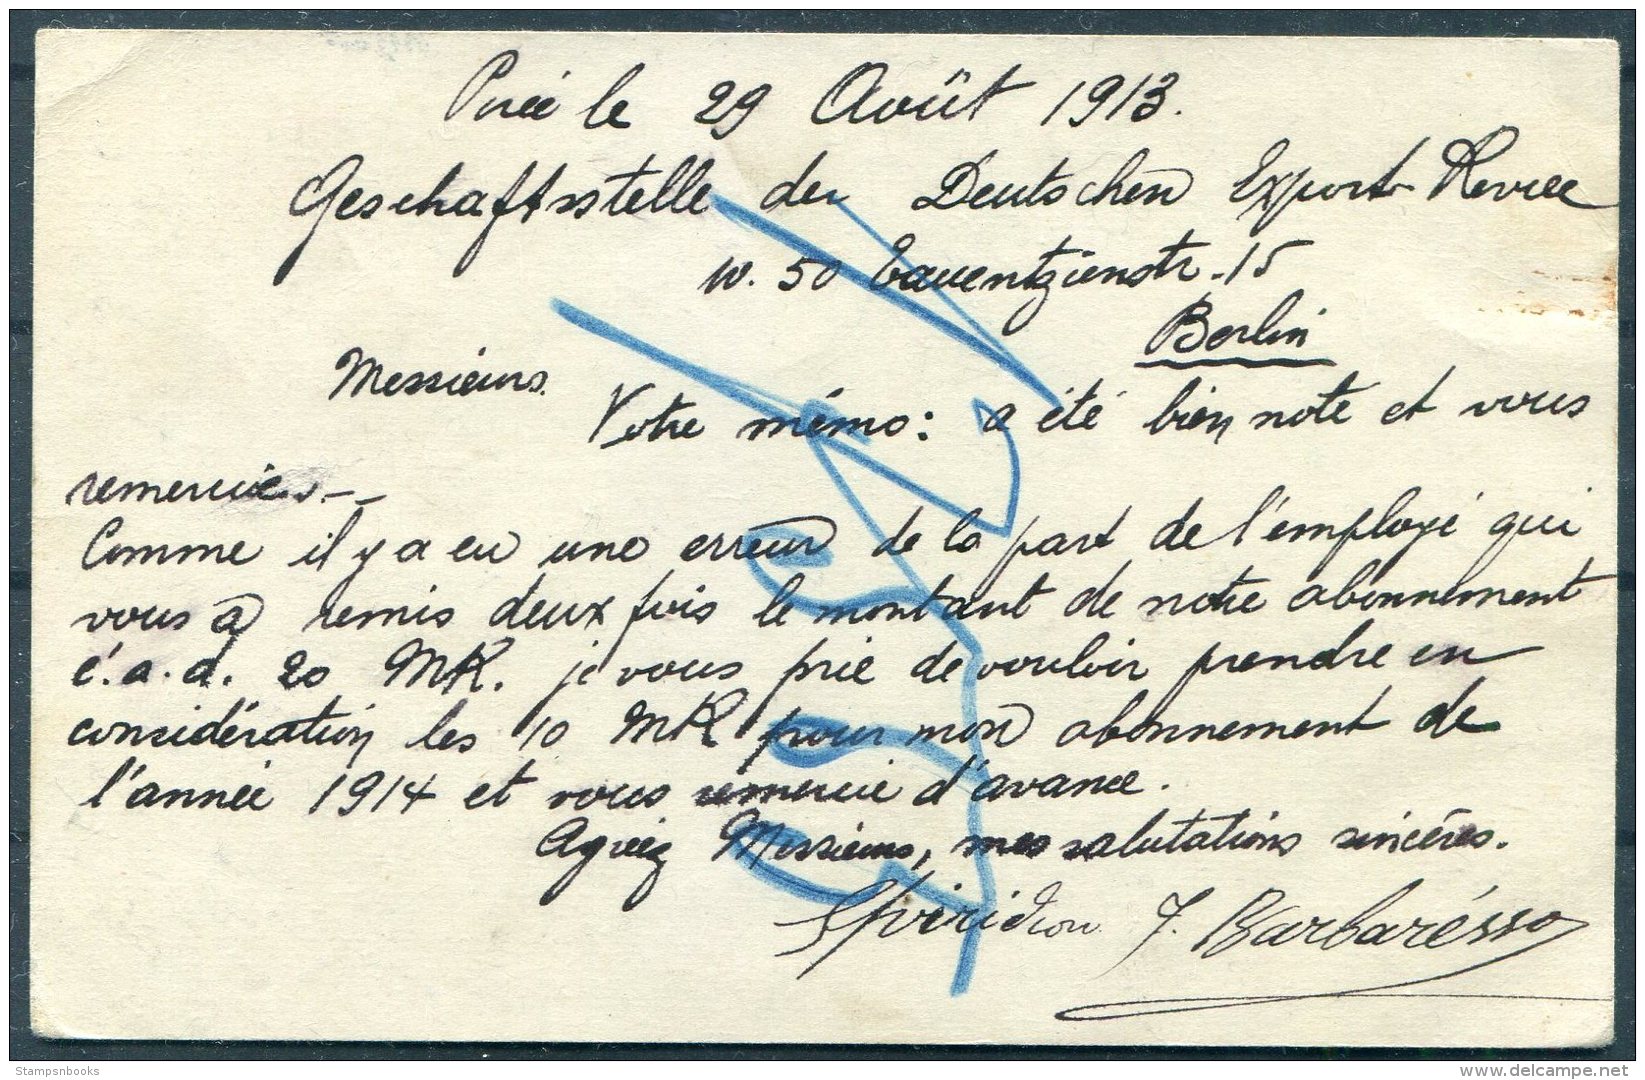 1913 Greece Stationery Postcard. Piree - Berlin Germany - Briefe U. Dokumente